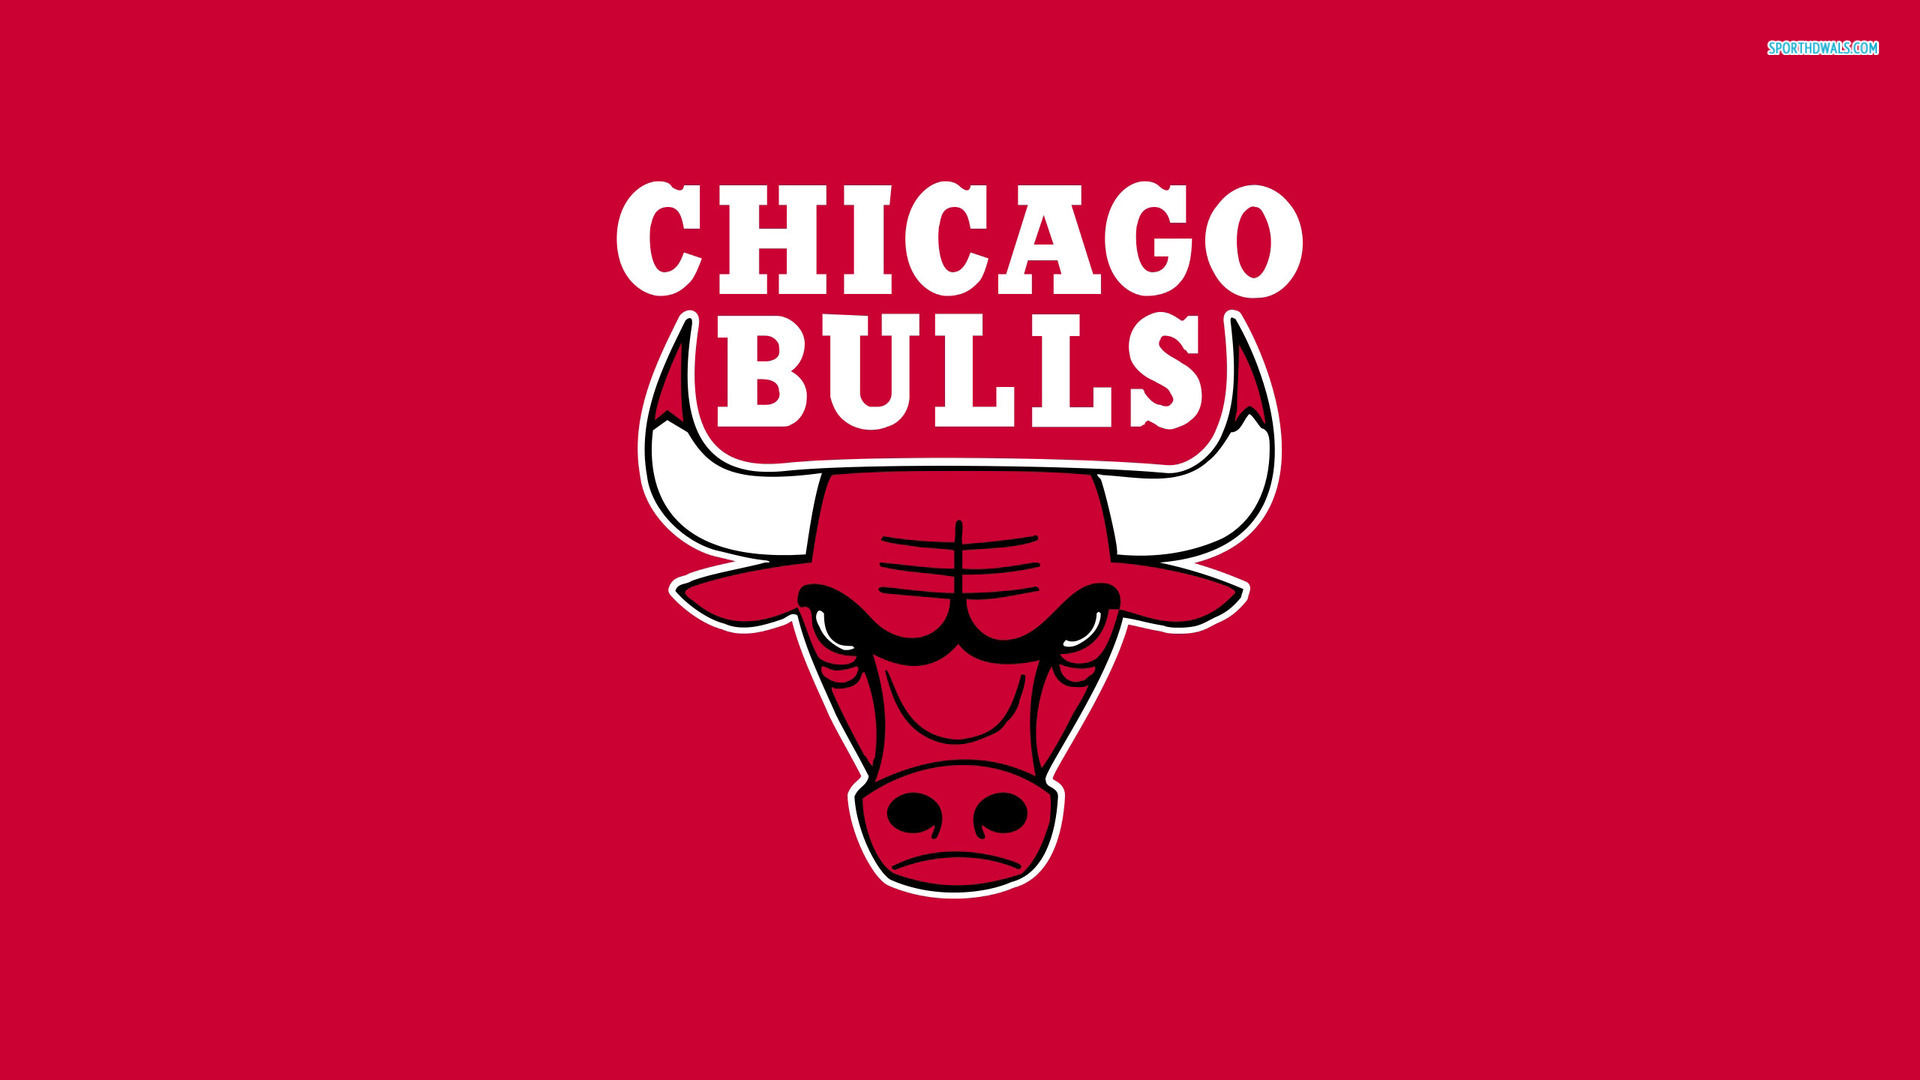 Chicago Bulls HD background Chicago Bulls wallpapers 1920x1080